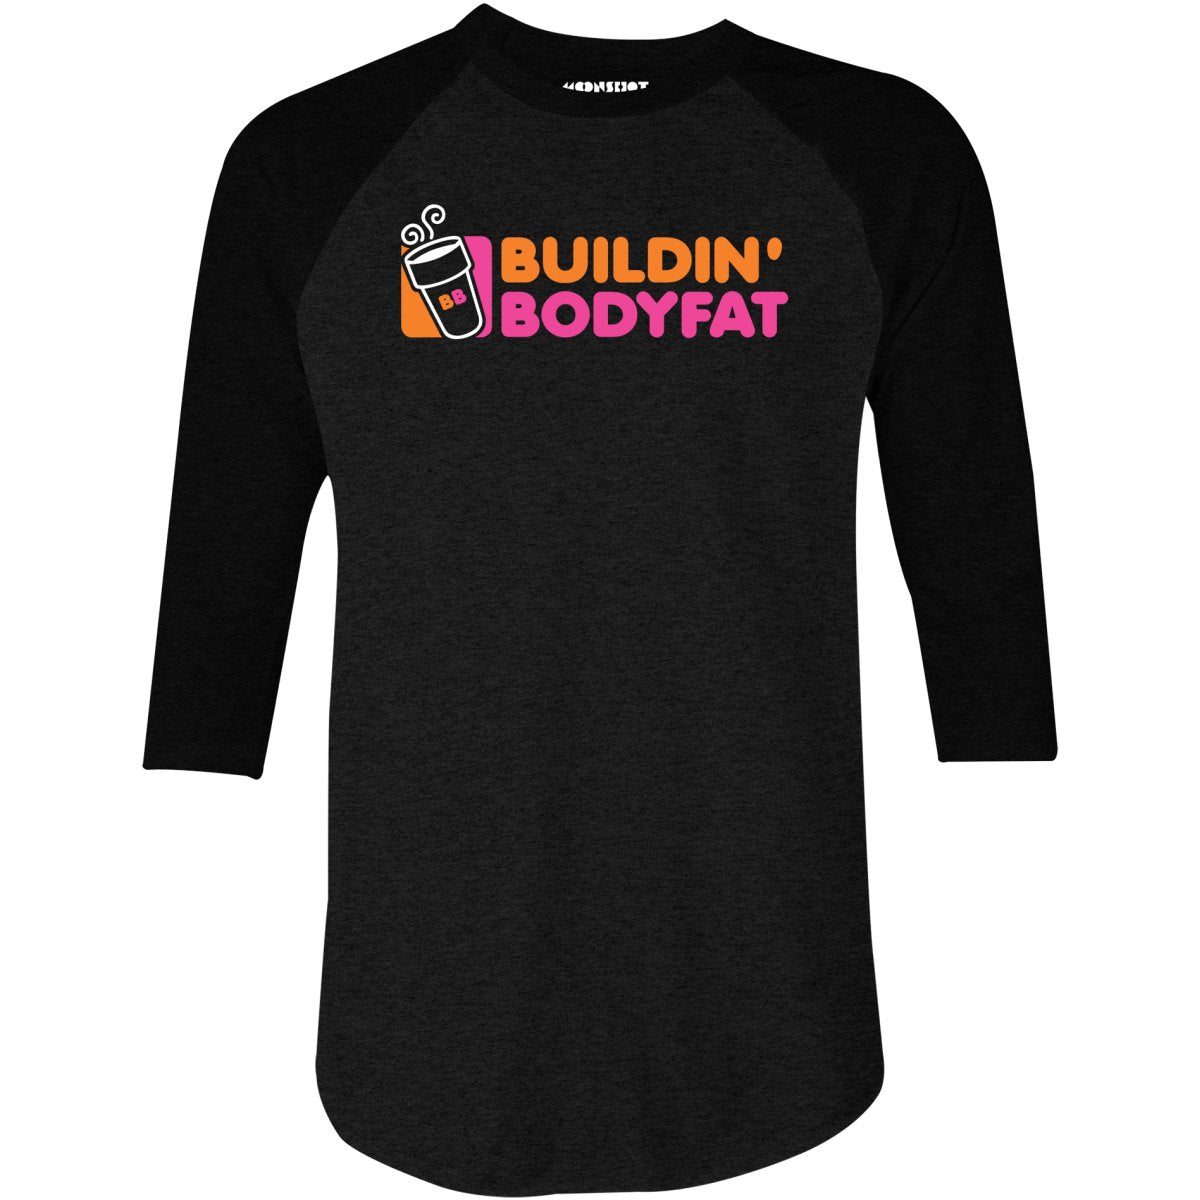 Buildin' Bodyfat - 3/4 Sleeve Raglan T-Shirt